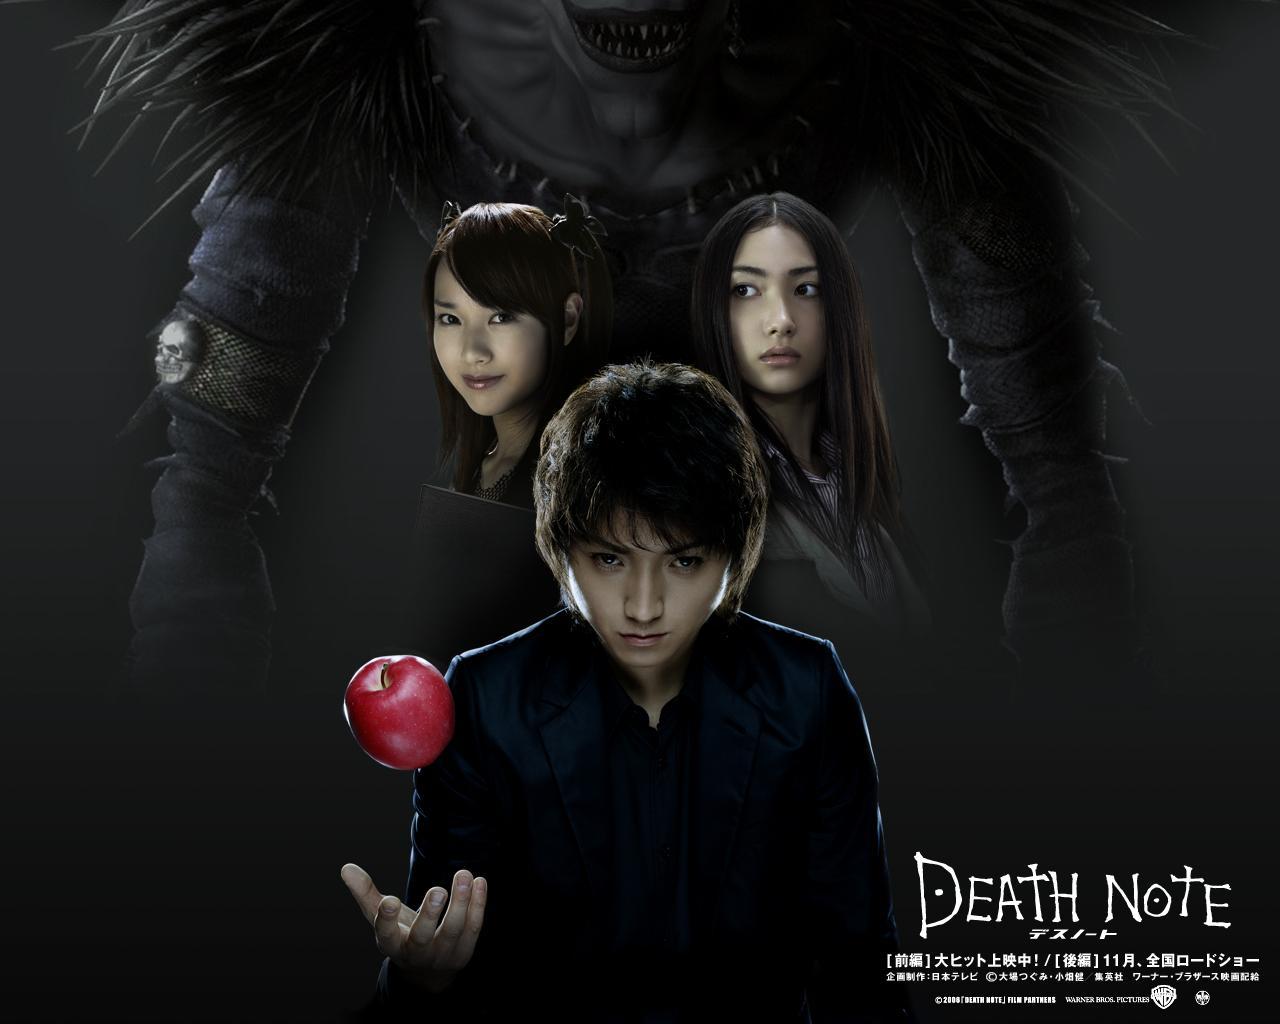 Death Note (TV Series 2006–2007) - IMDb